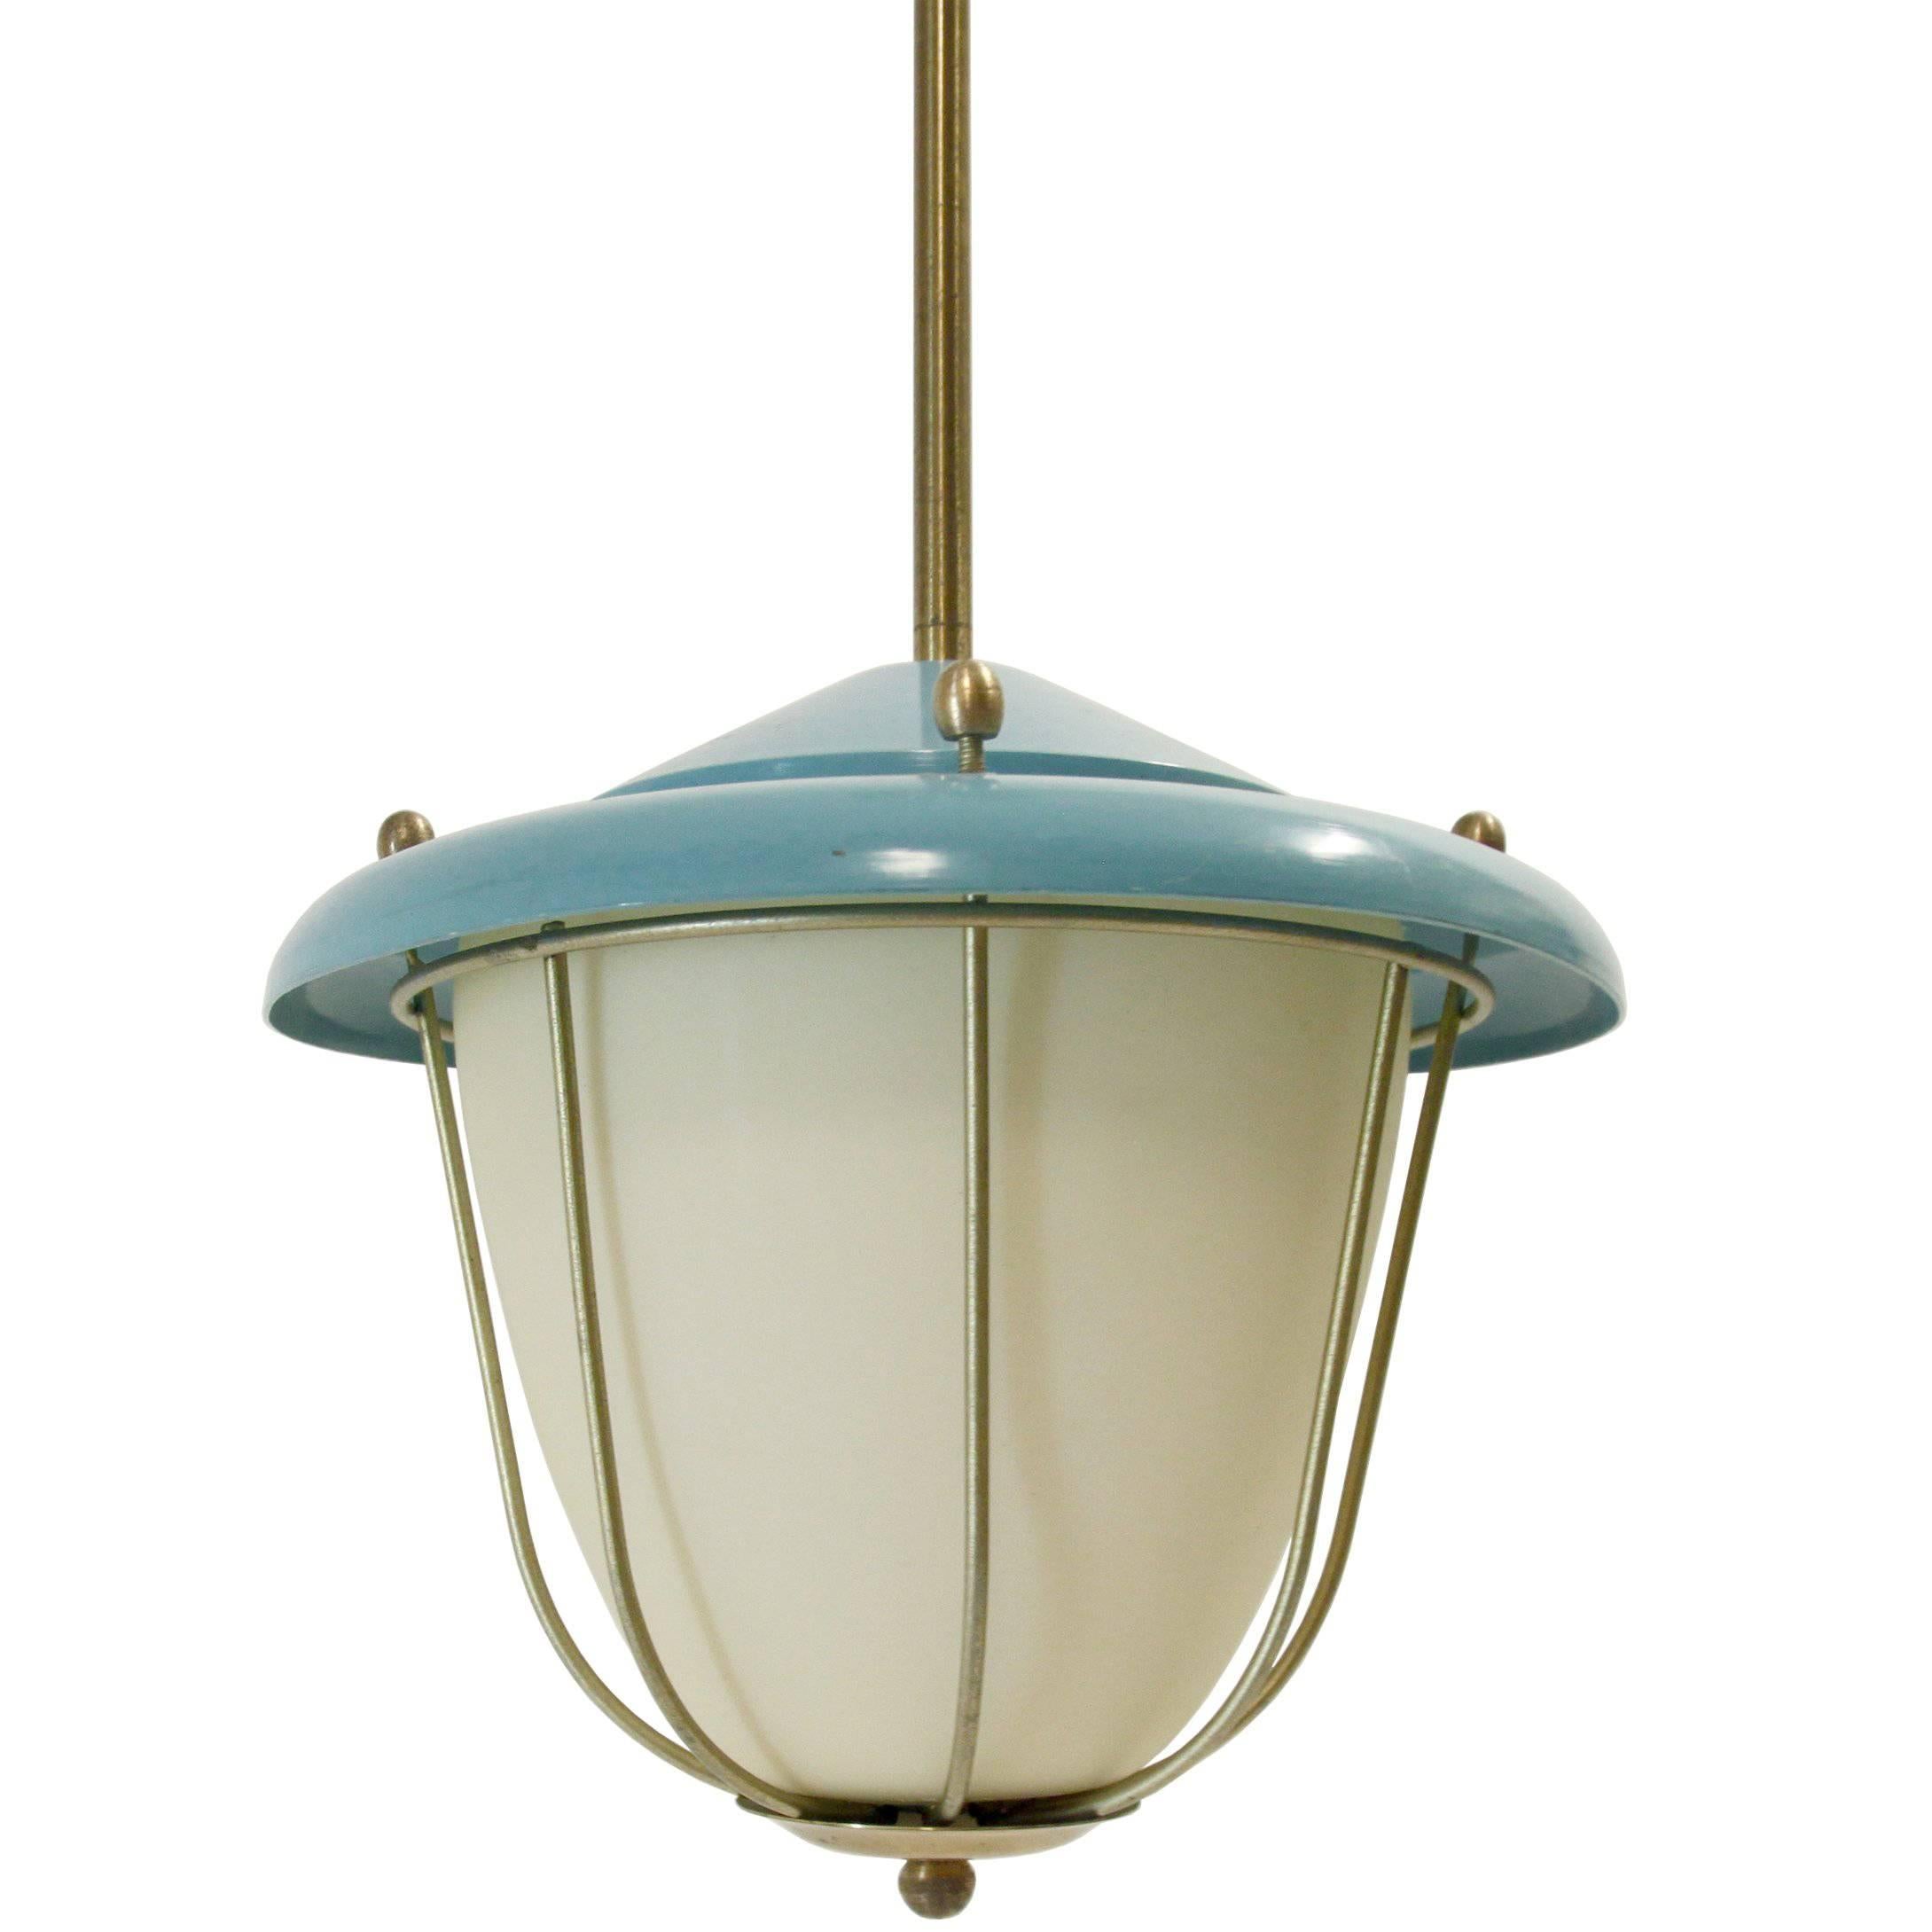 Functionalist Ceiling Light, 1950s